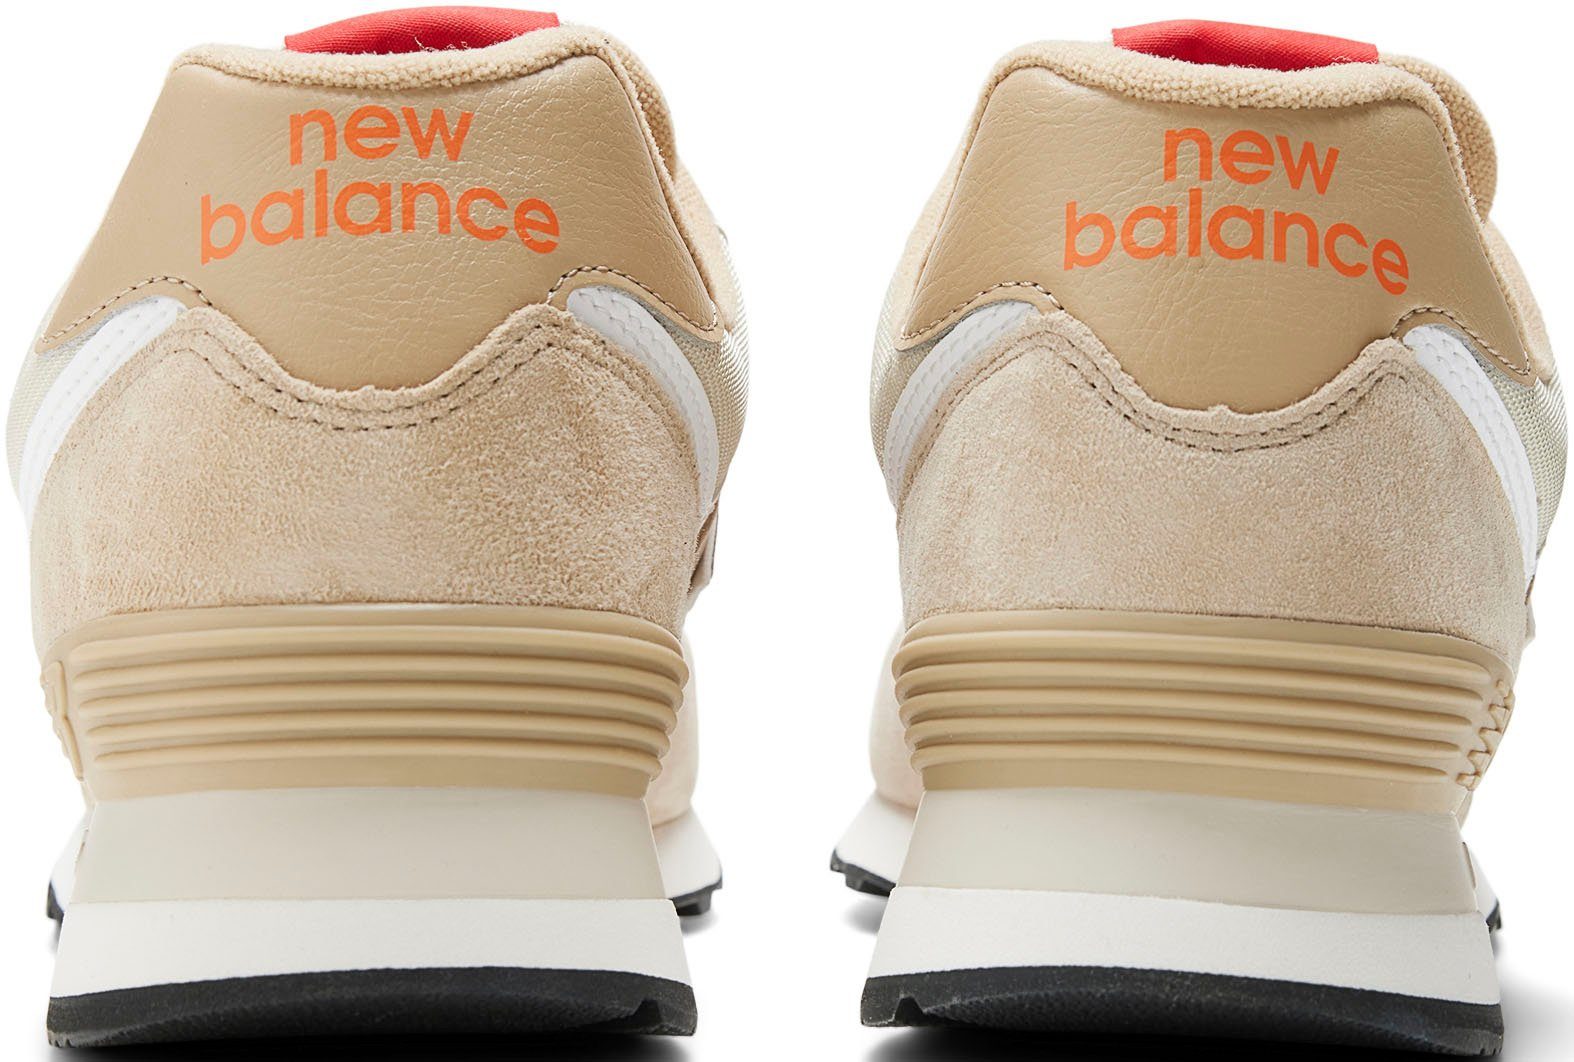 beige-orange U574 New Sneaker Balance